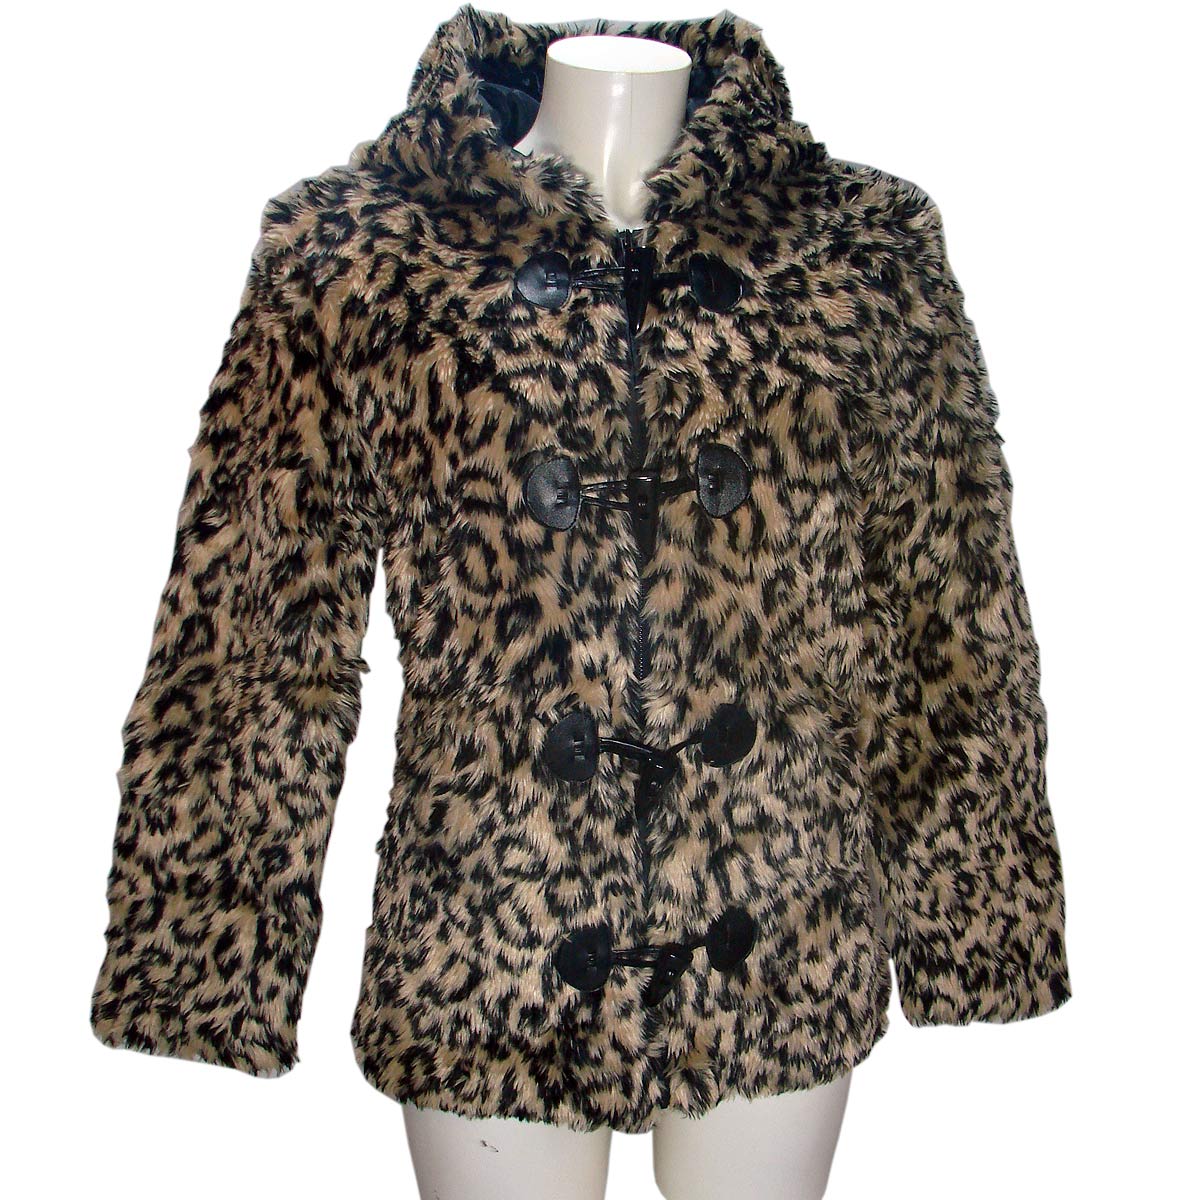 Leopard Fur Jacket by JawbreakerAnother Way of Life